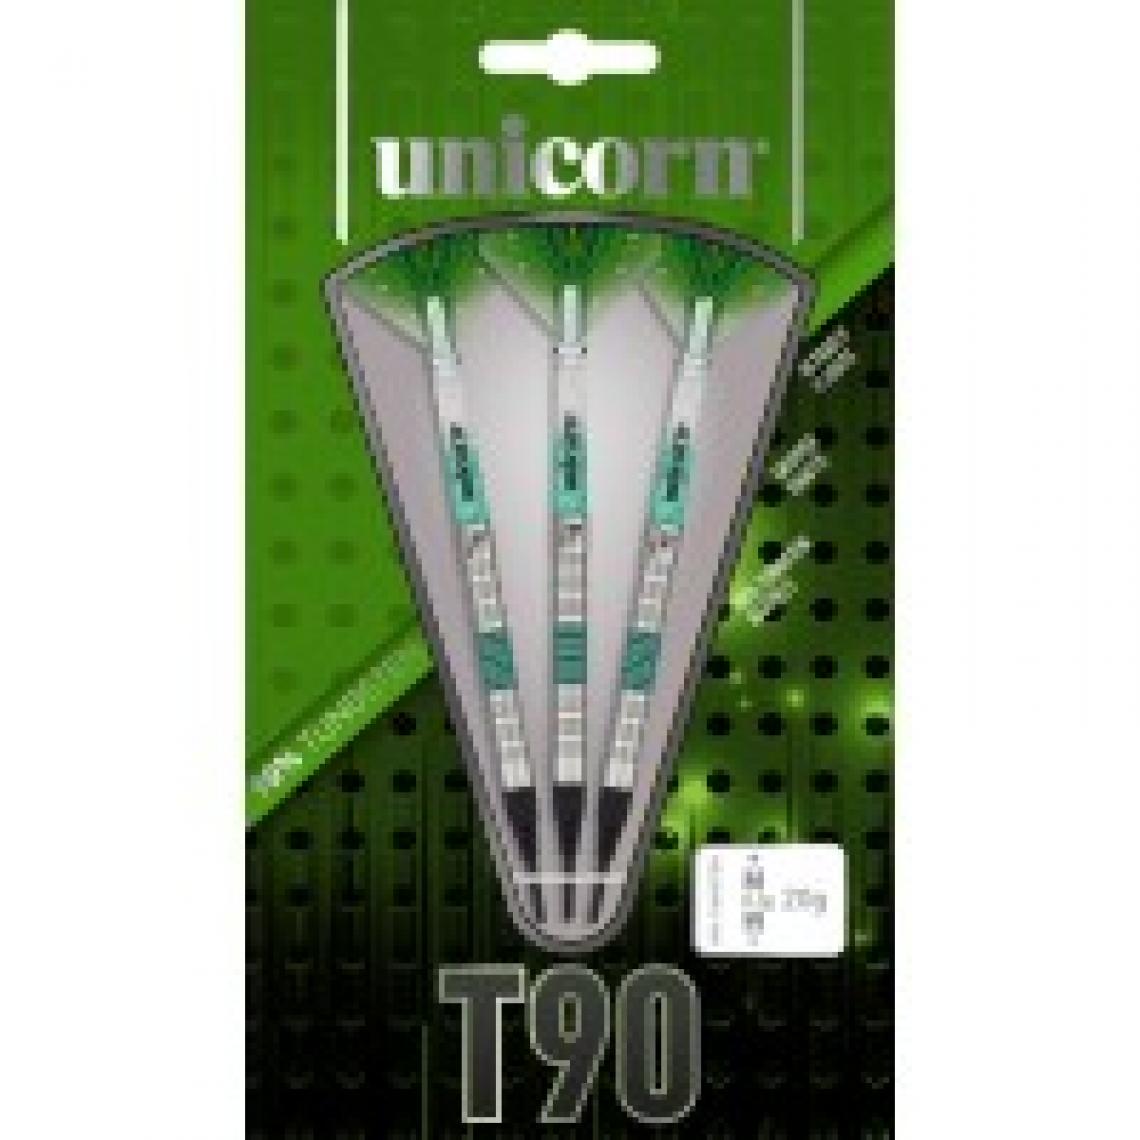 Unicorn - Fléchettes Unicorn T90 CORE XL GREEN - 90% TUNGSTEN 19 gr- pointe nylon - Fléchettes